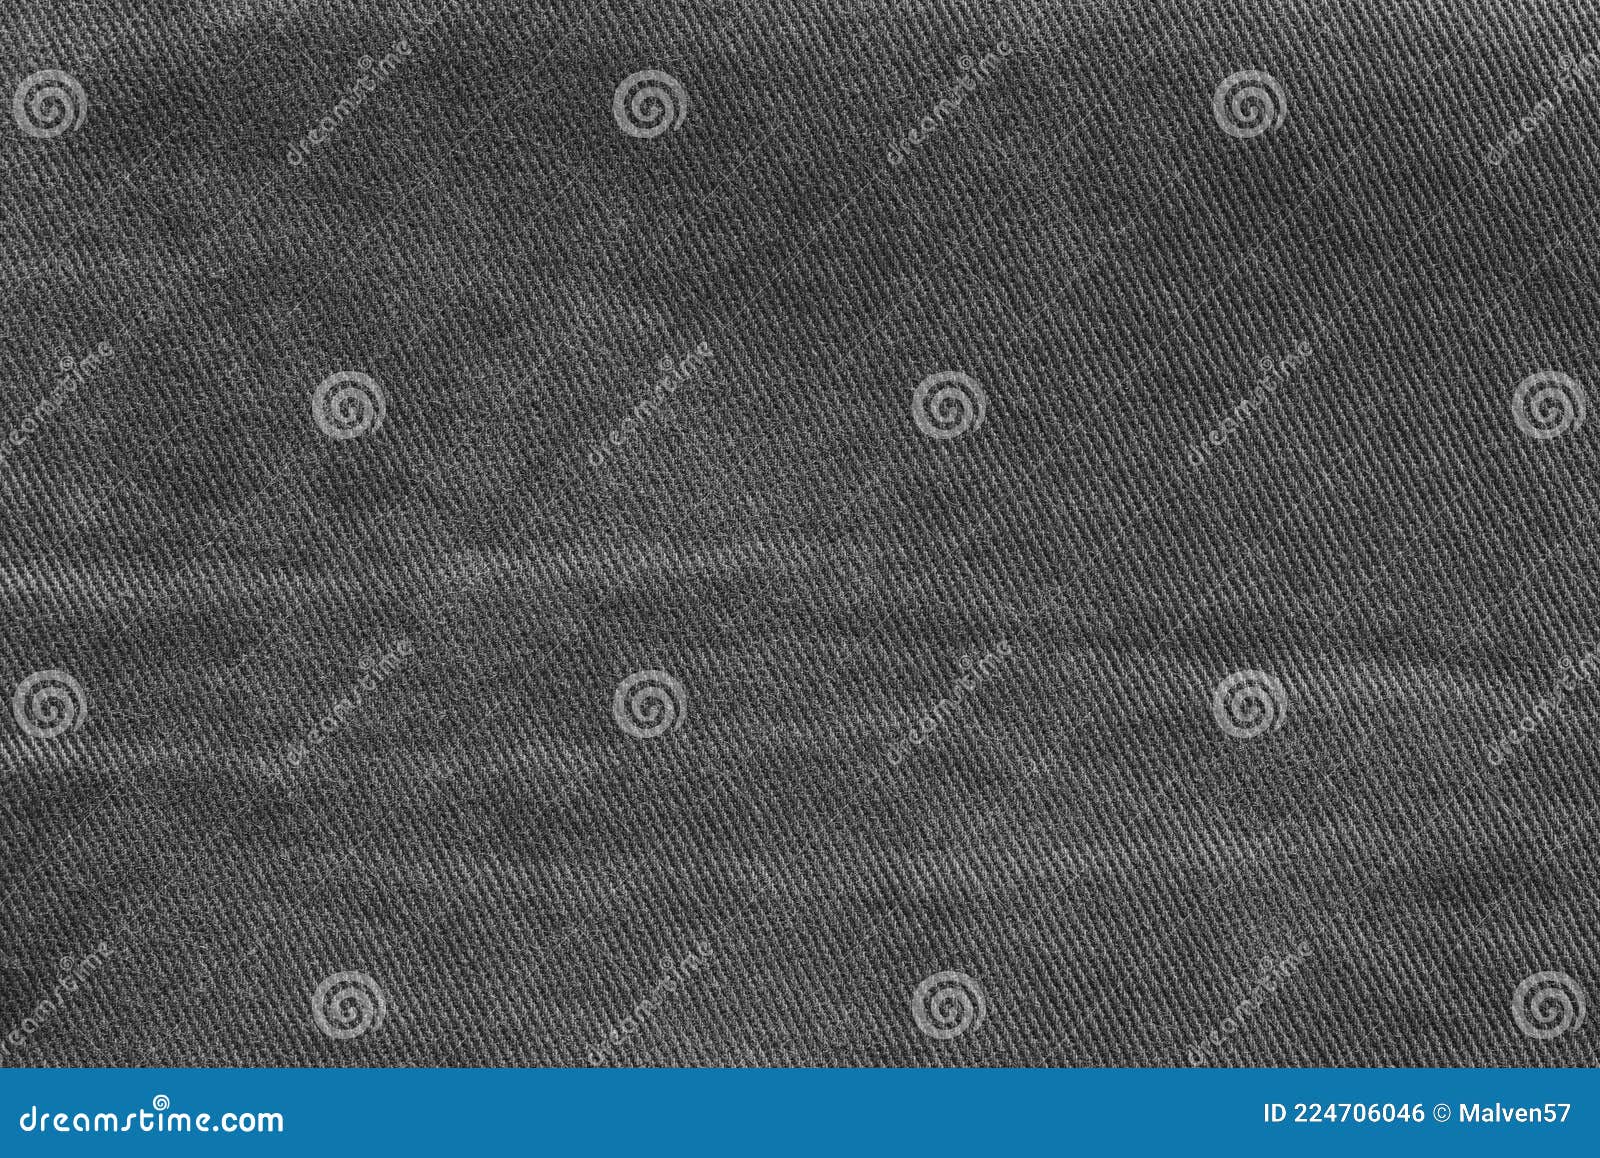 Texture of Dark Denim Fabric Stock Photo - Image of casual, backdrop ...